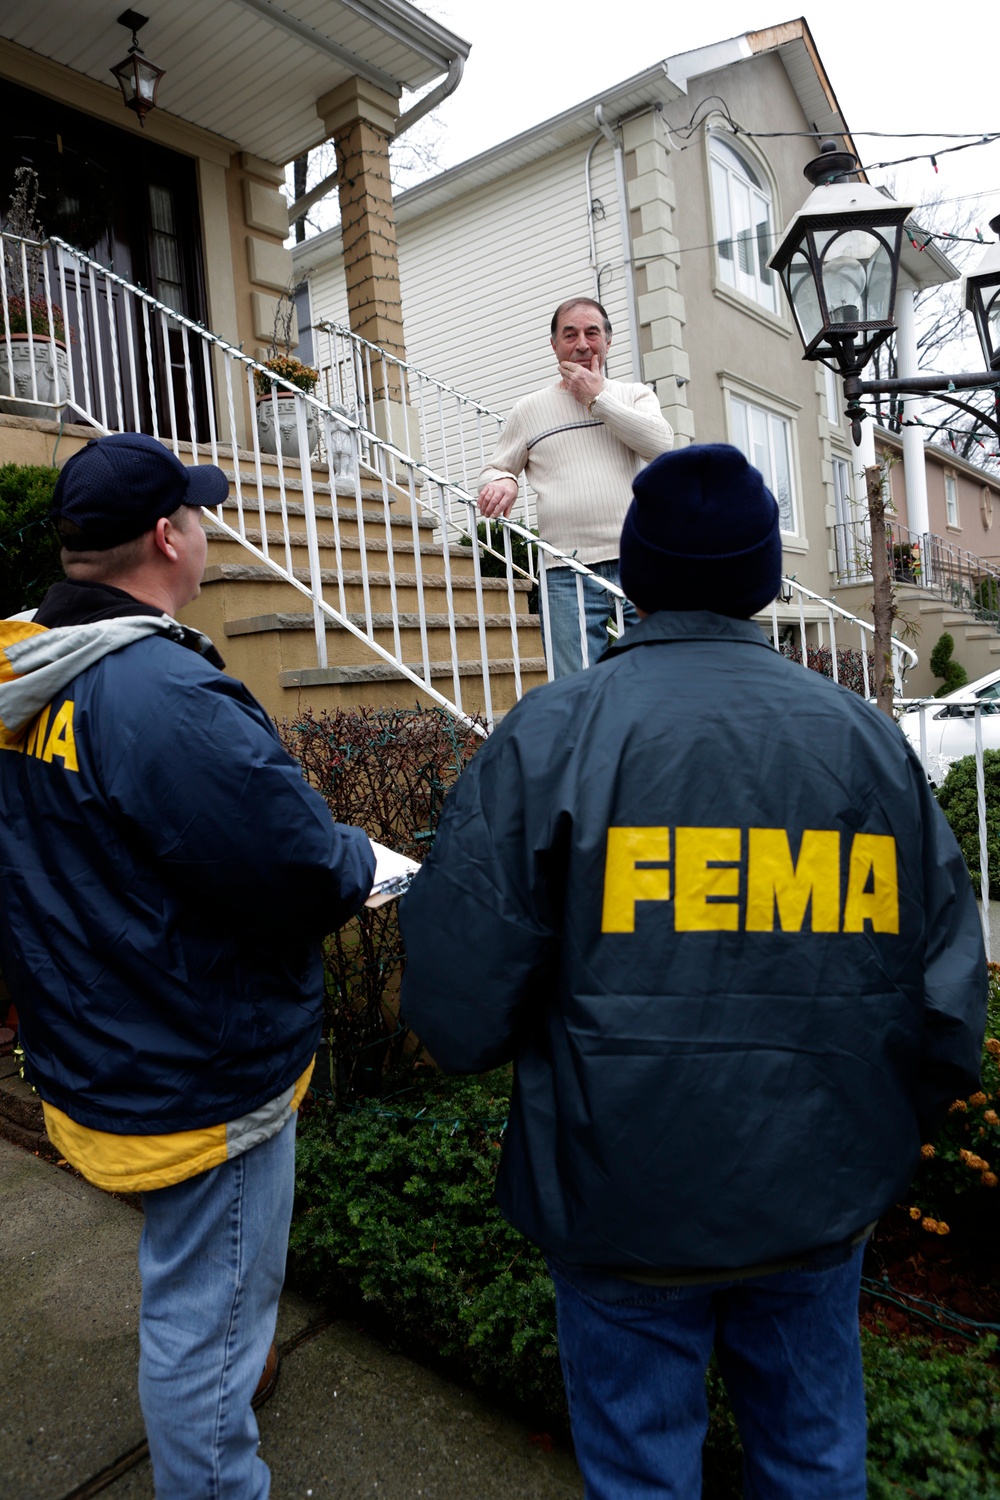 FEMA Surge Capacity Force canvases Staten Island